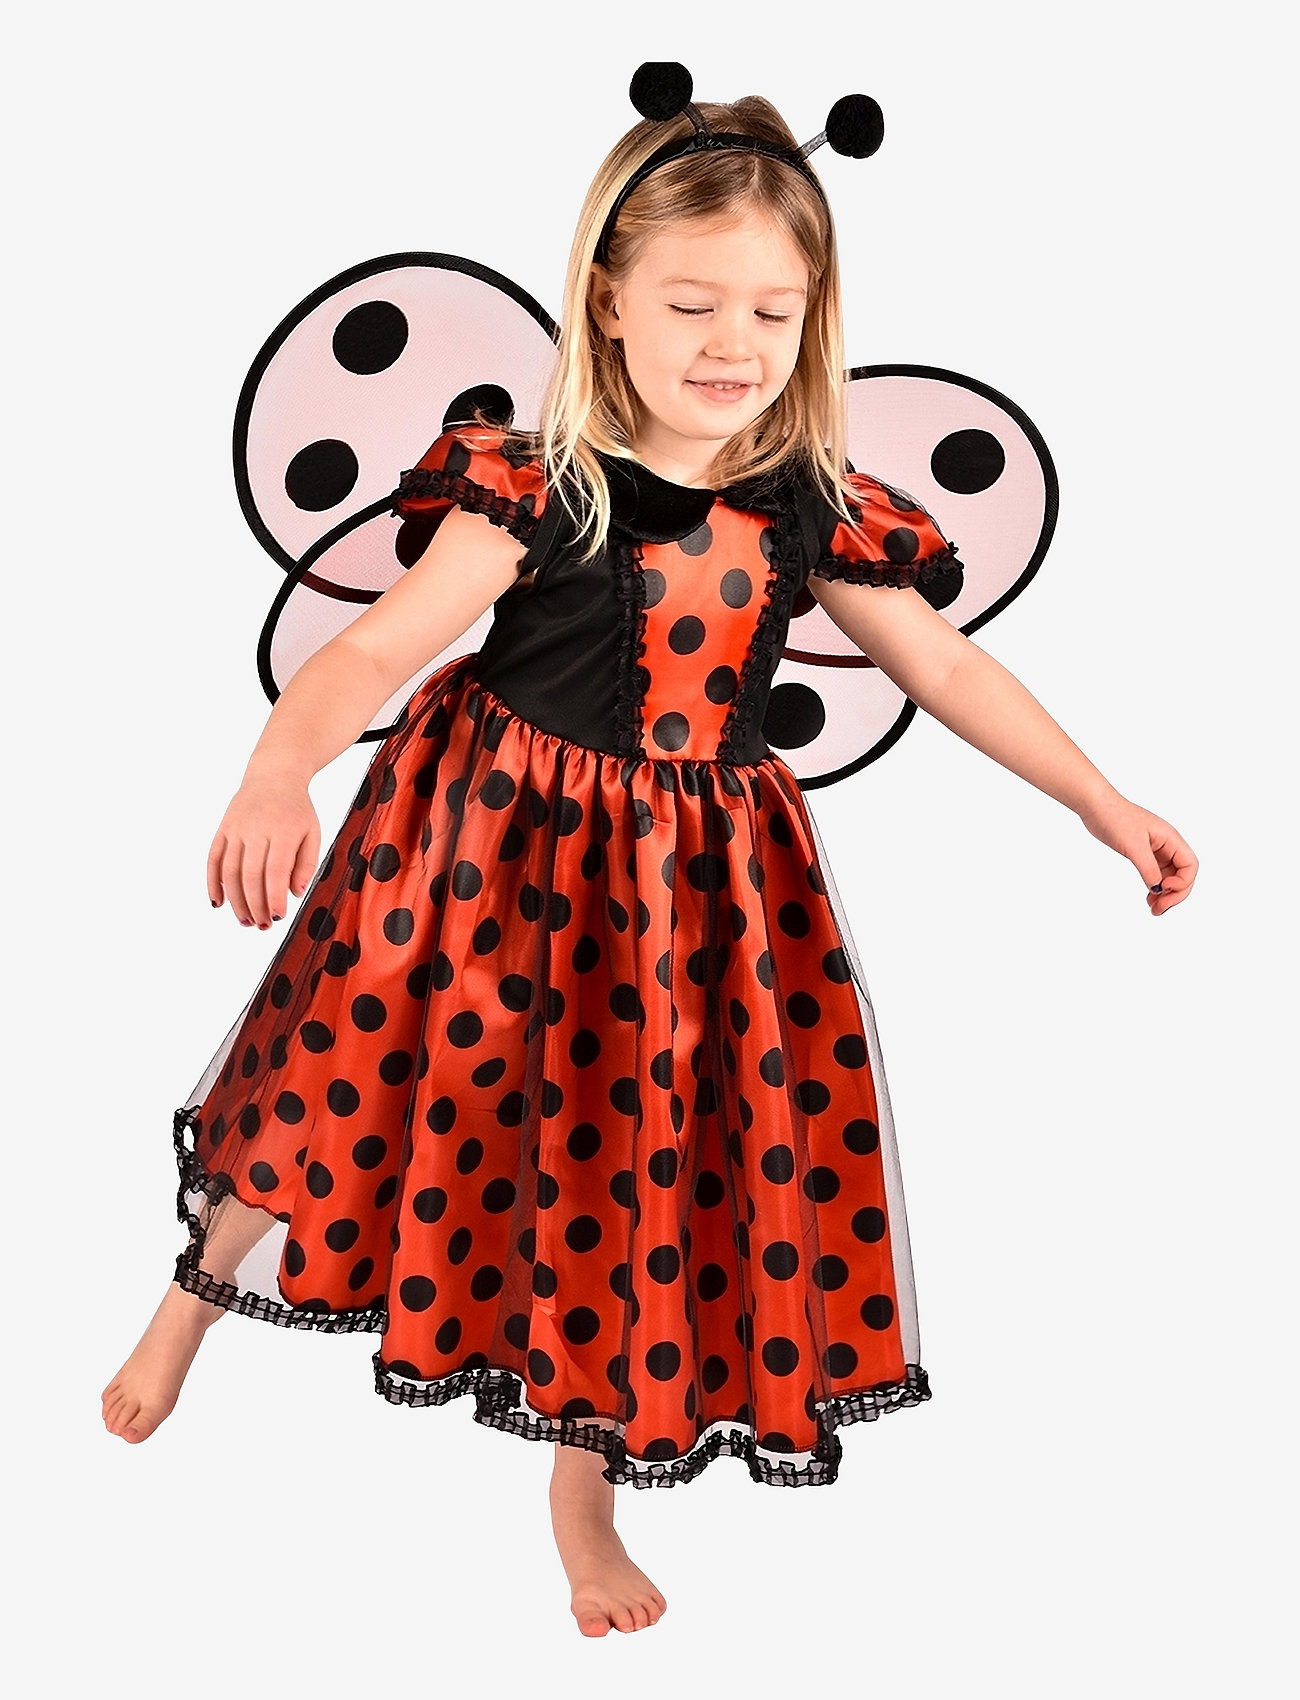 Den goda fen - Ladybug Costume - kostīmi - red/black - 0